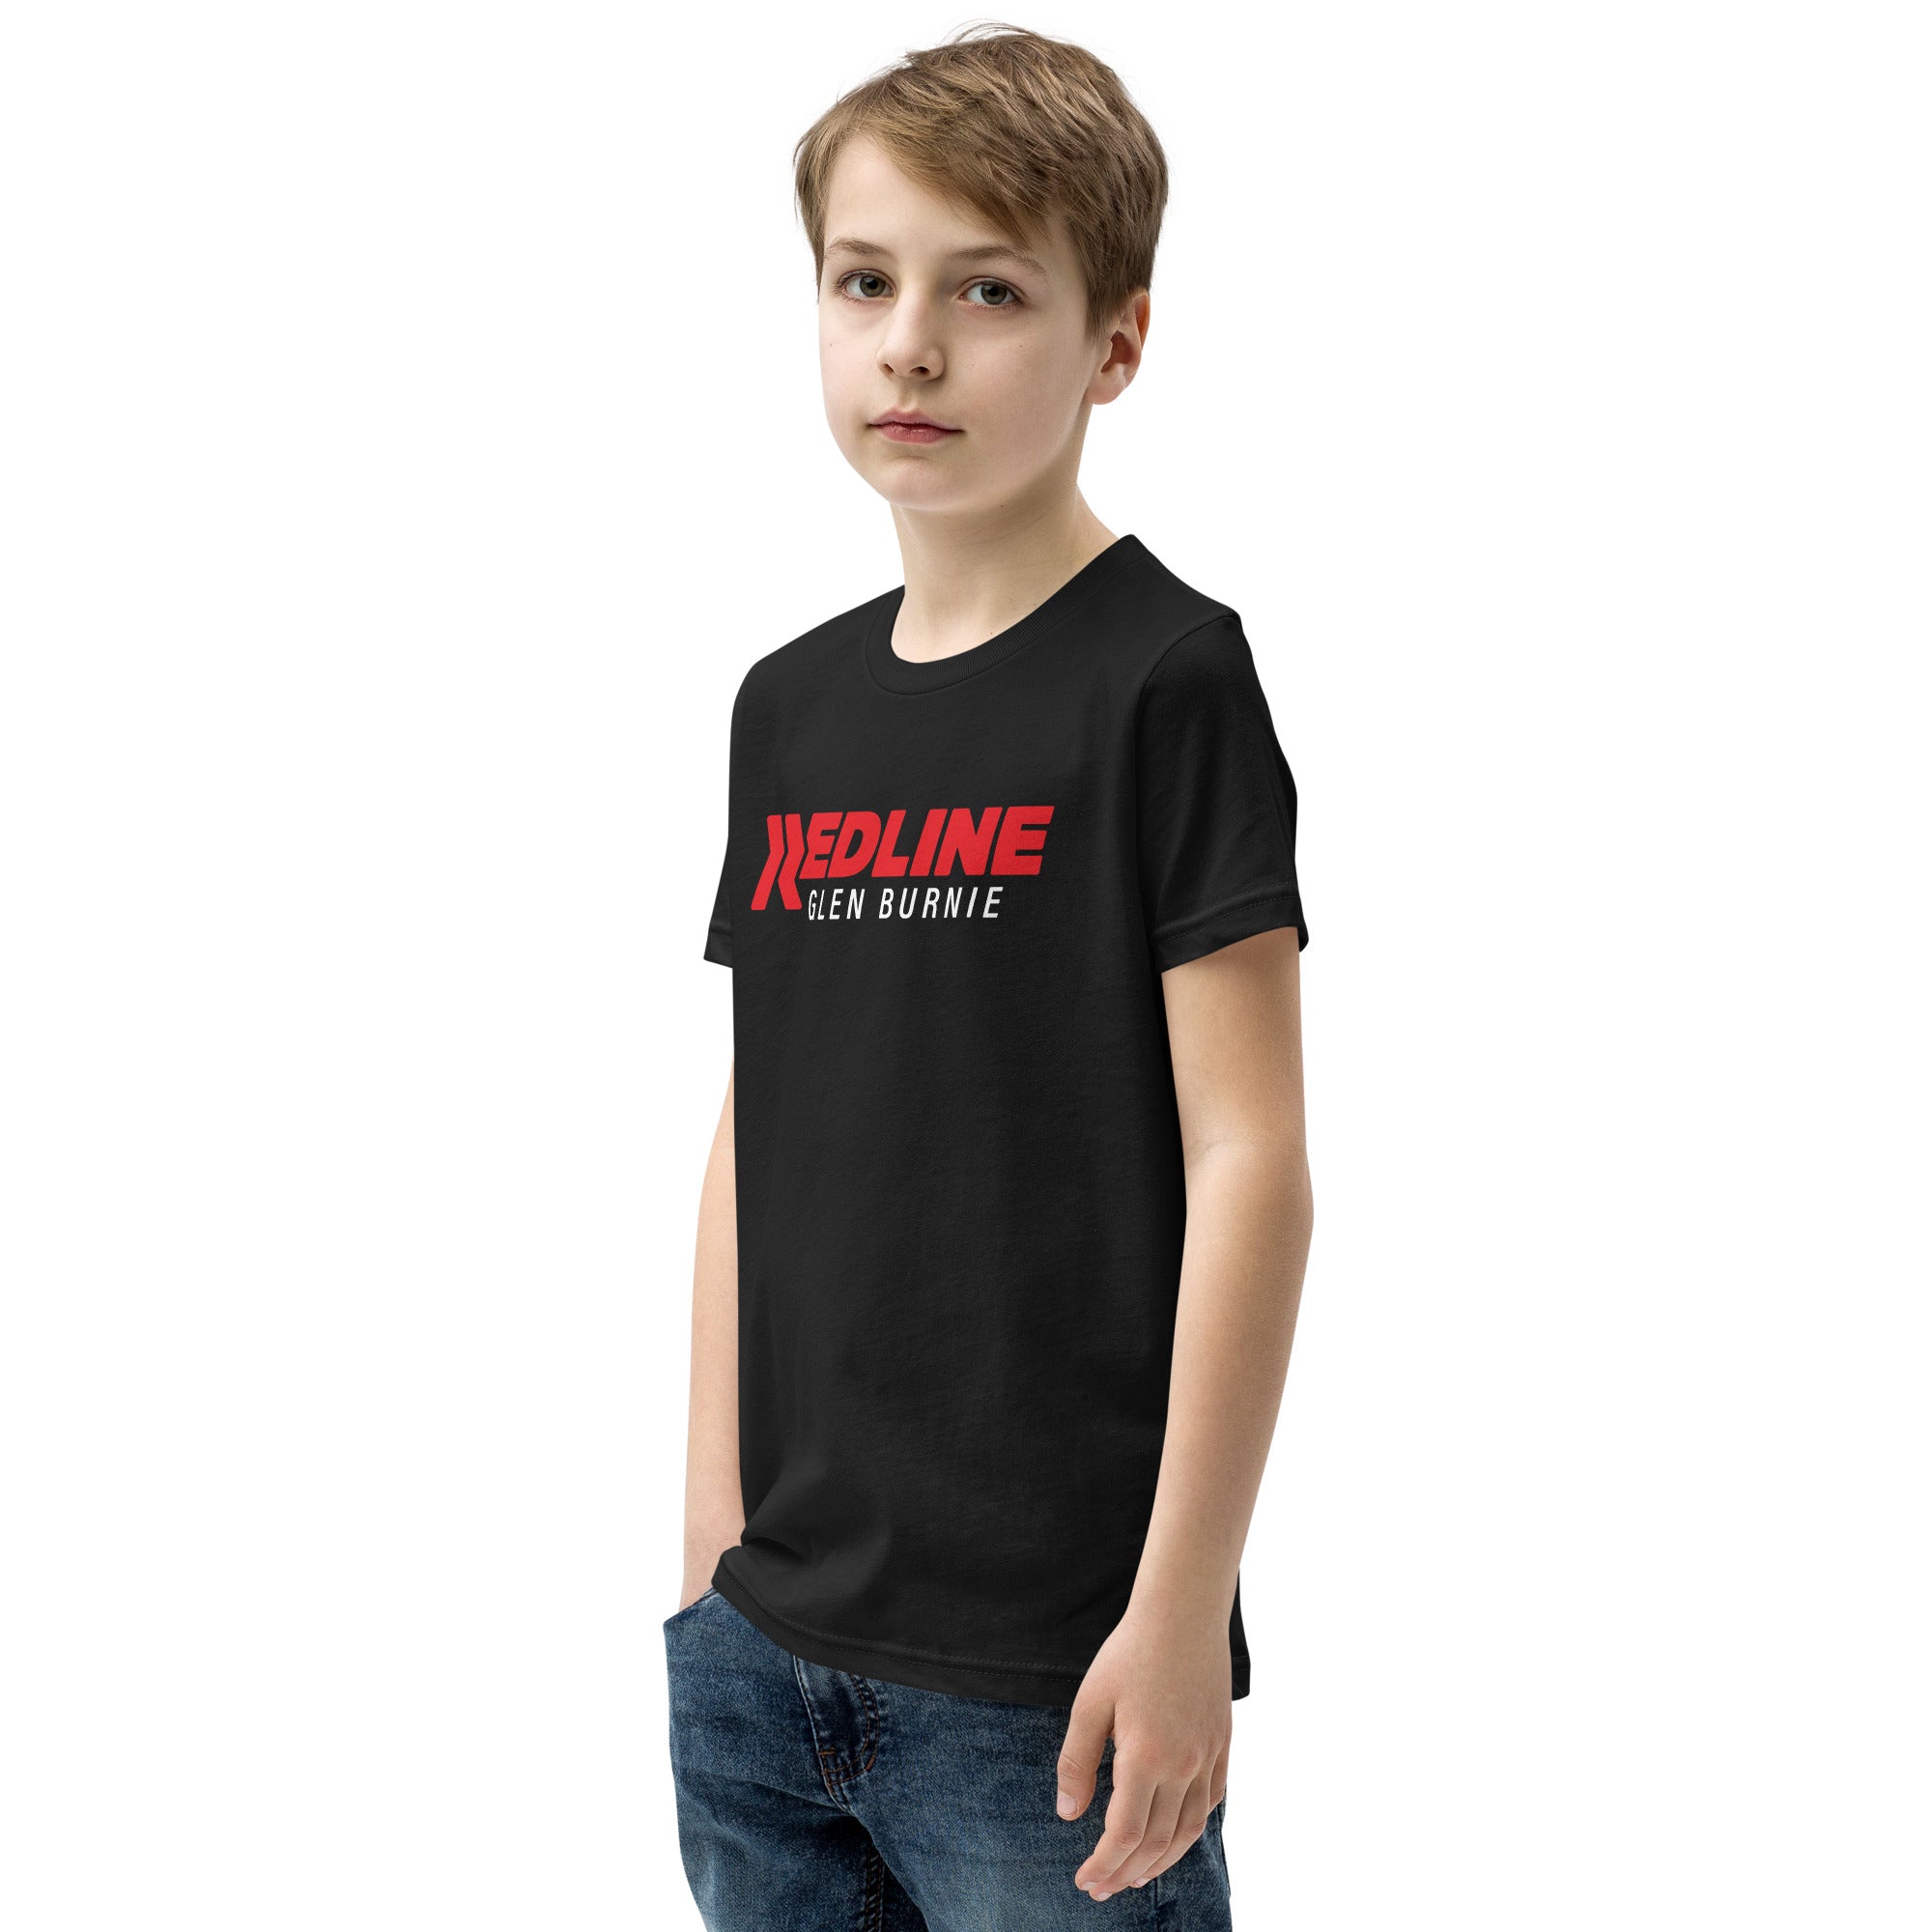 Glen Burnie Logo R/W - Black Youth Short Sleeve T-Shirt